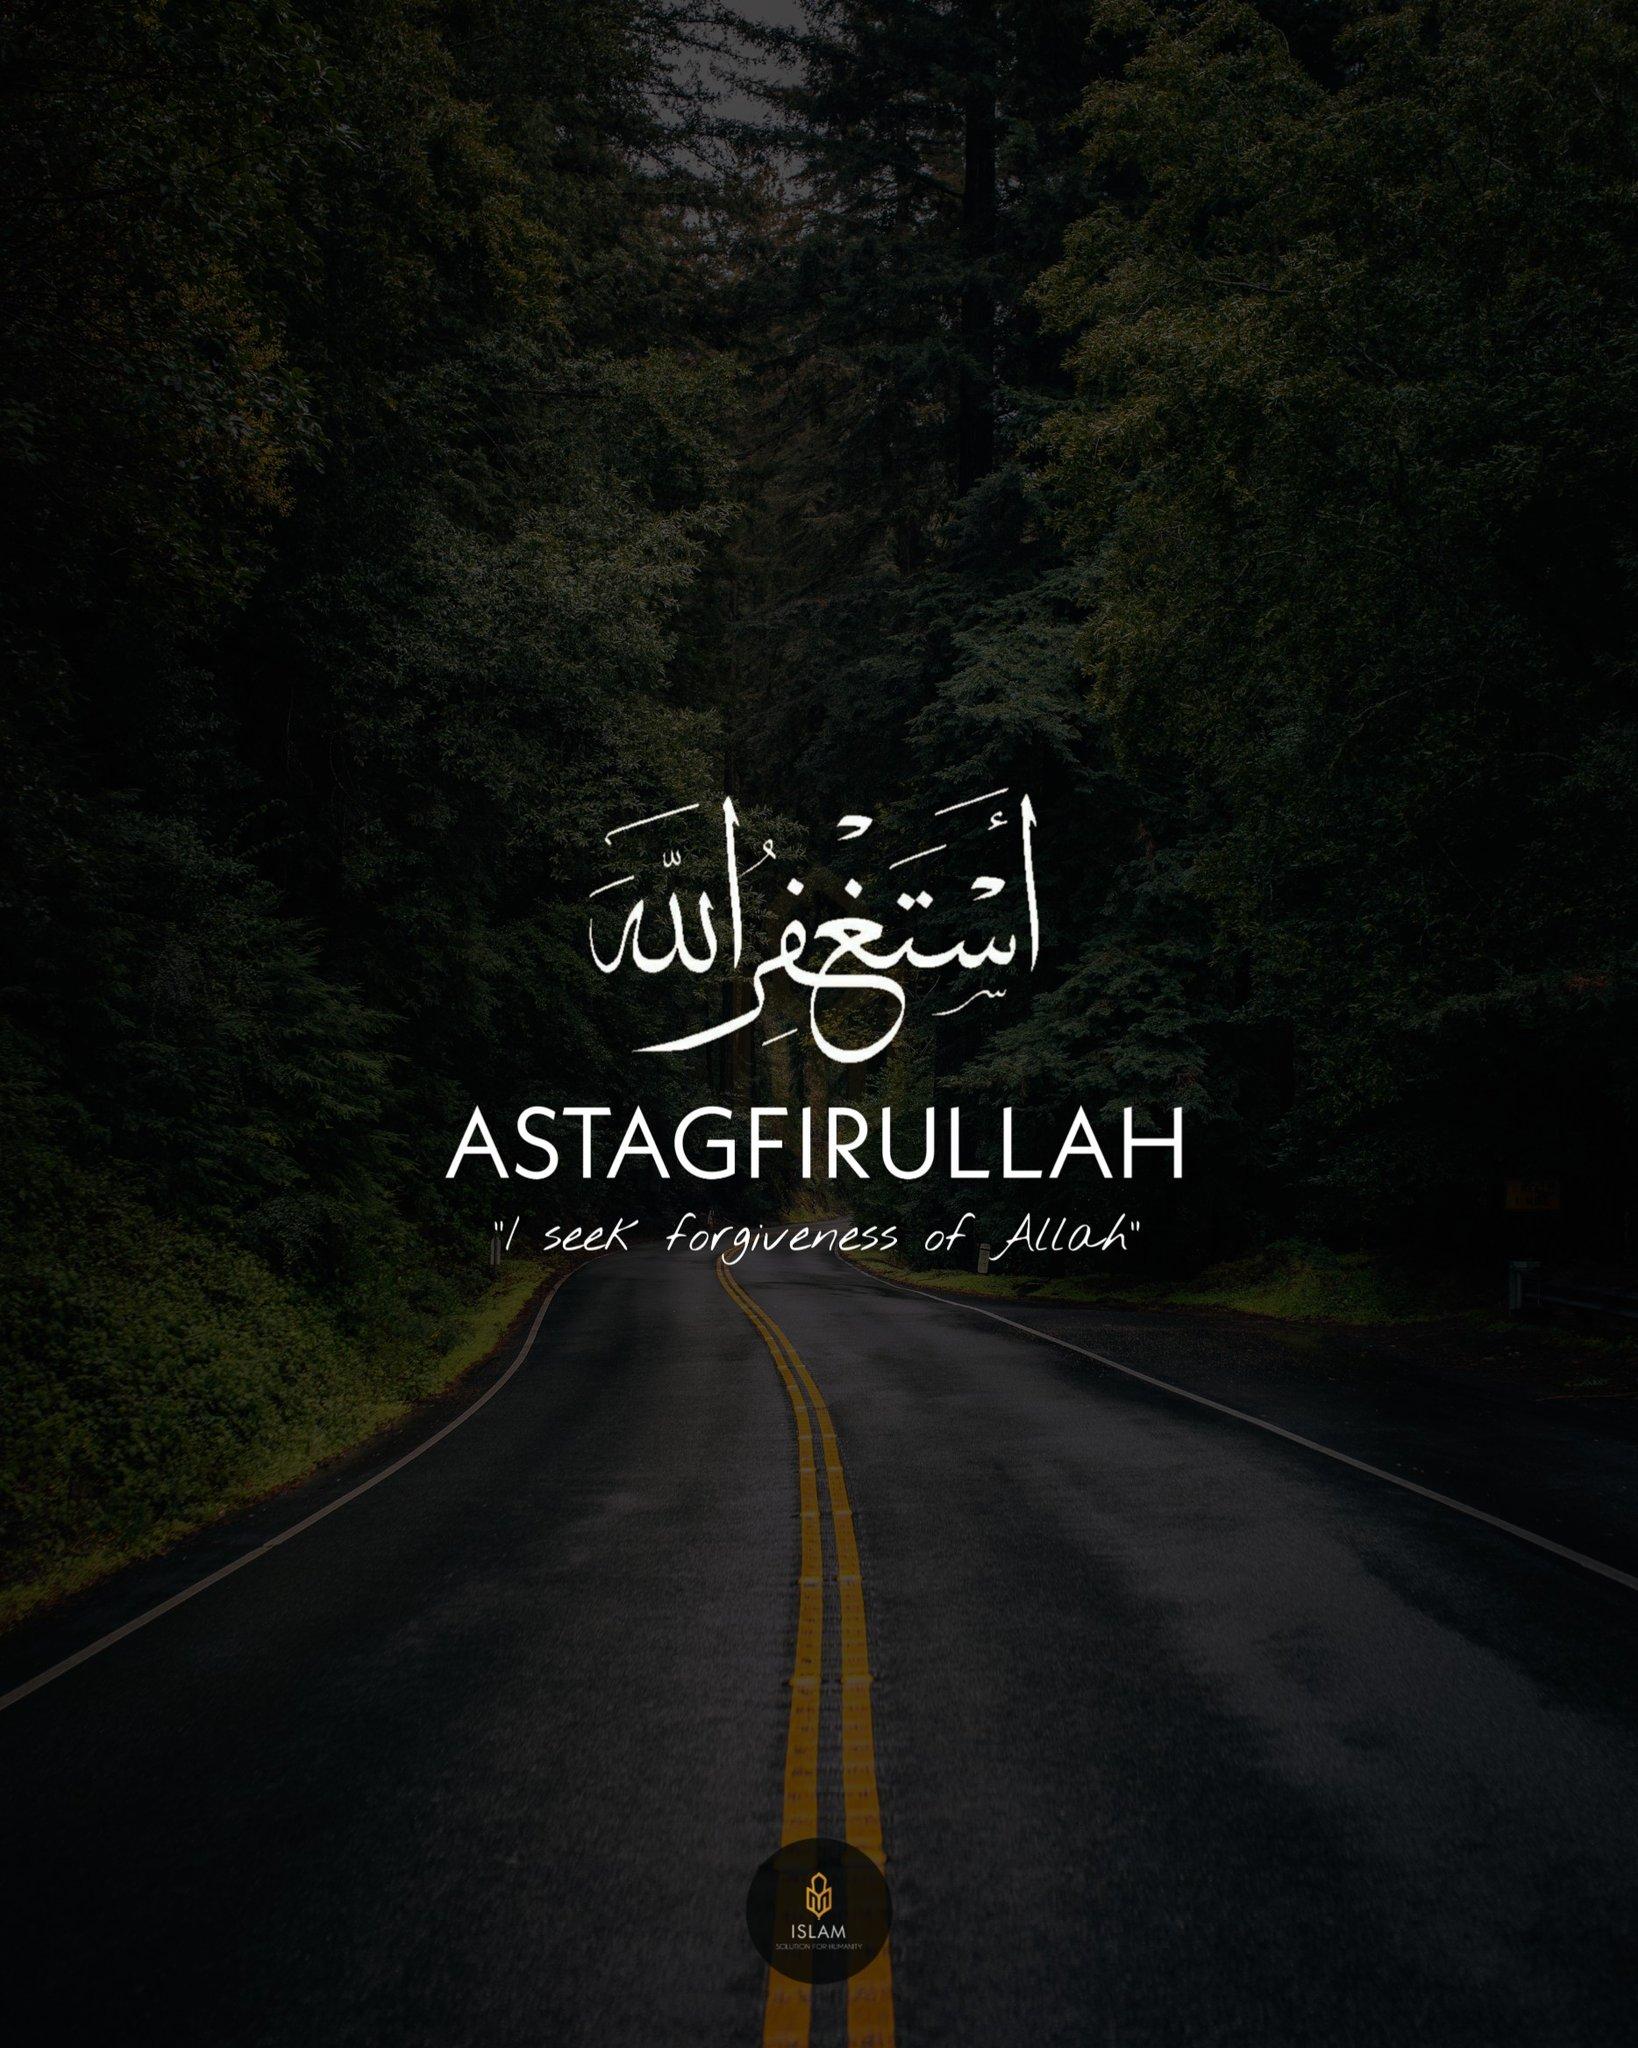 Premium Vector | Astaghfirullah calligraphy design arabic text illustration  background banner i seek forgiveness